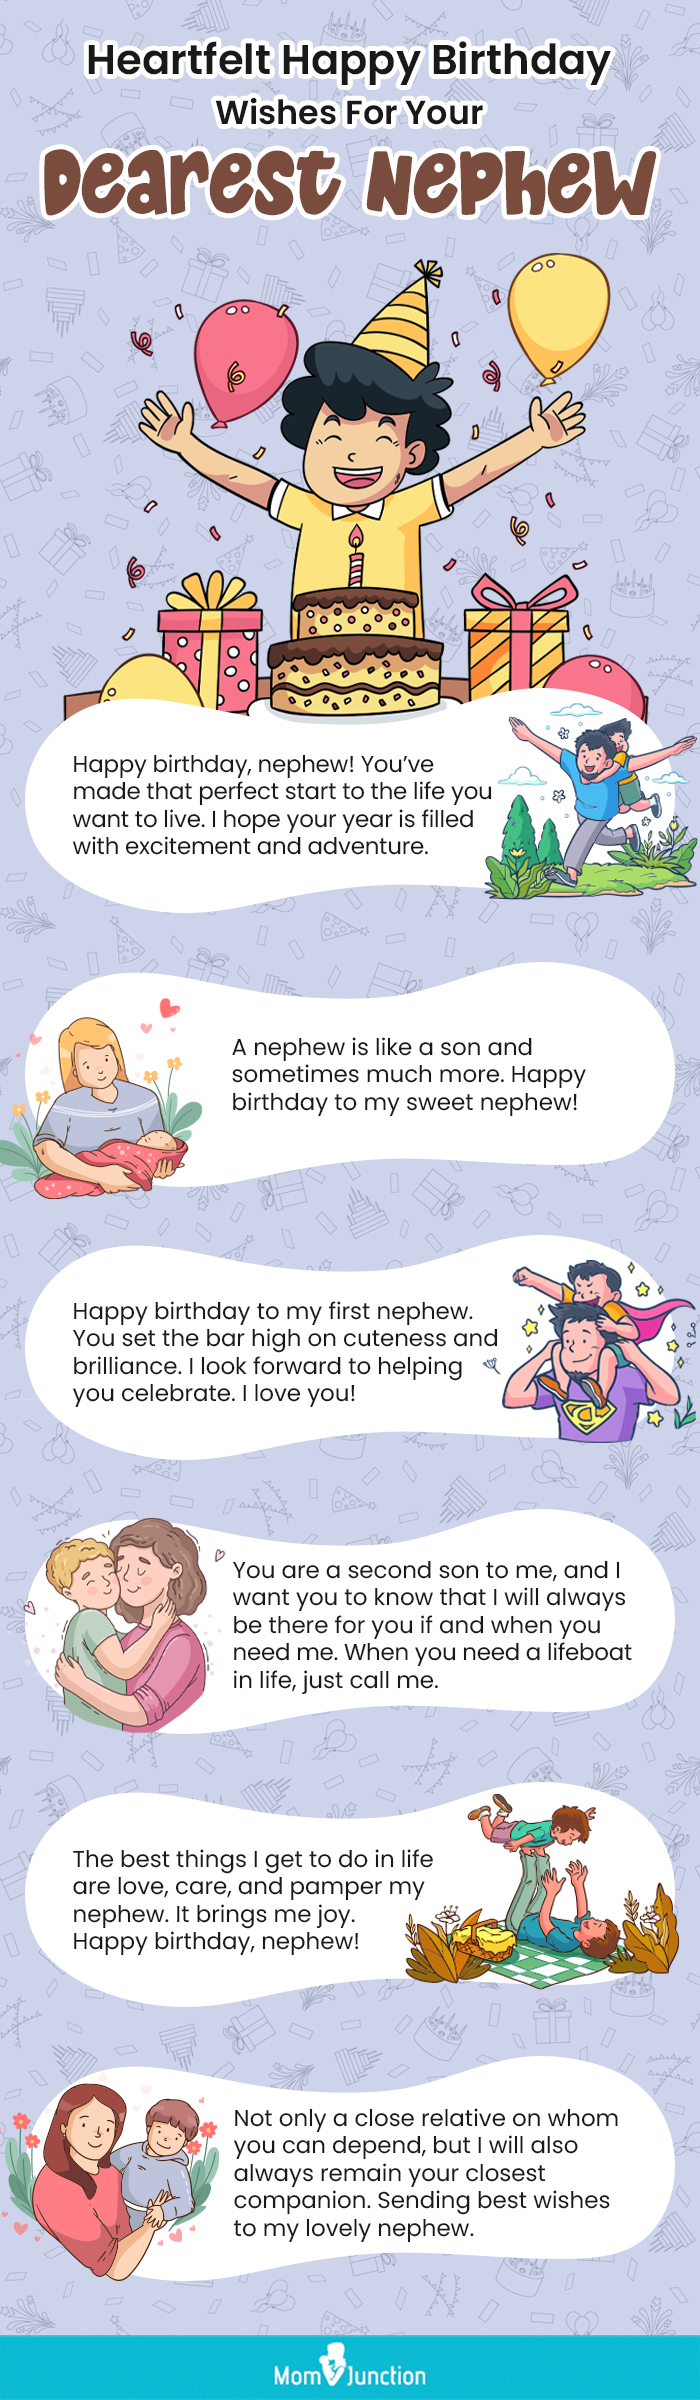 heartfelt happy birthday wishes for your dearest nephew (infographic)